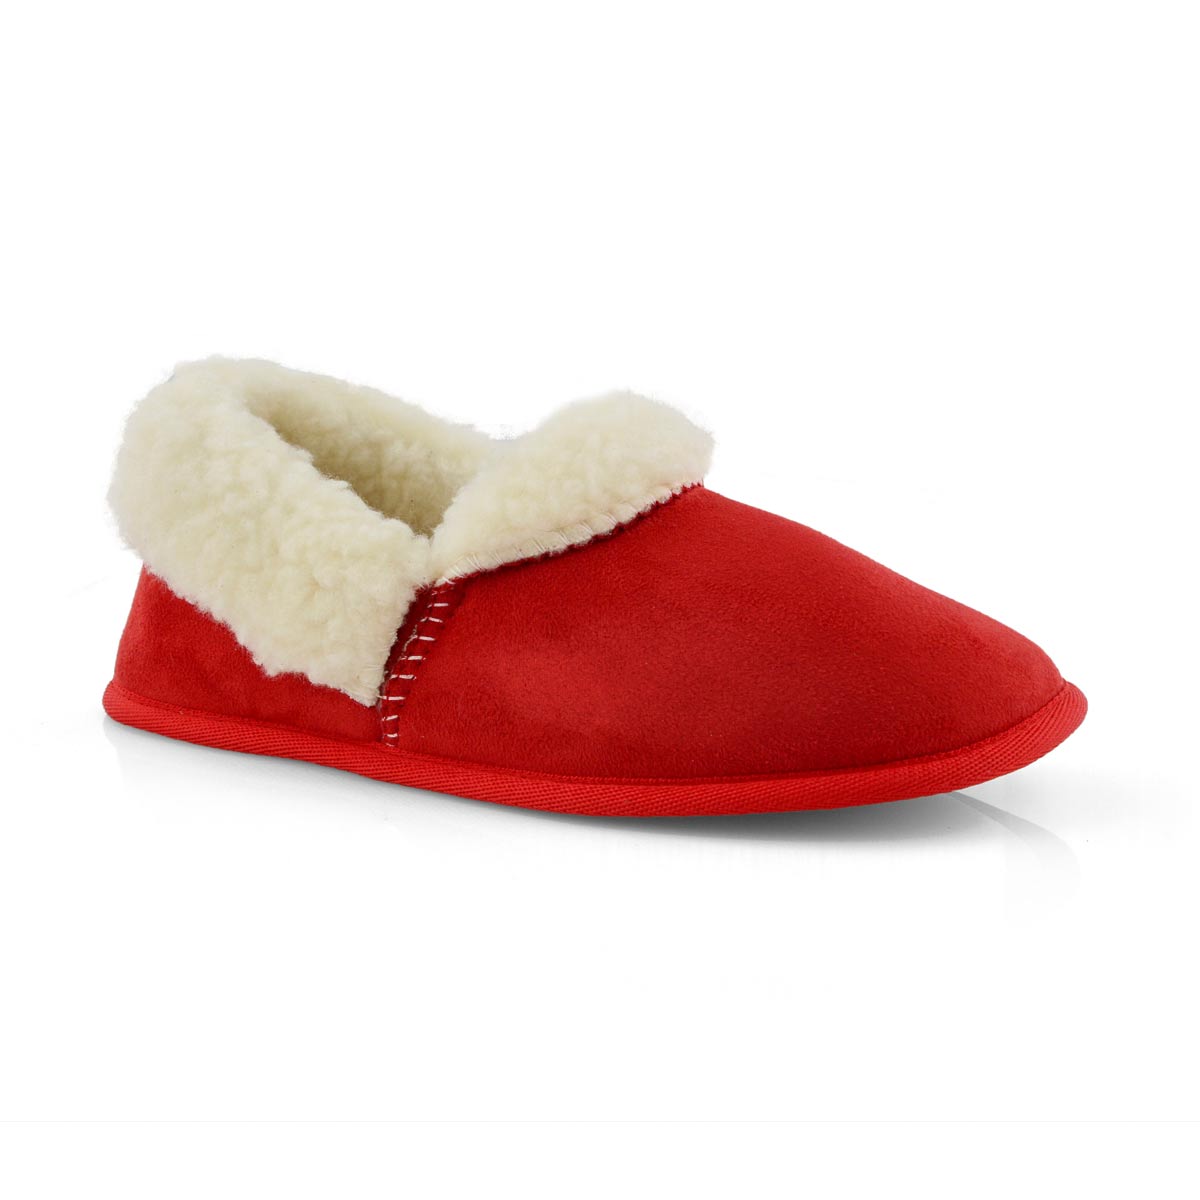 softmoc slippers womens